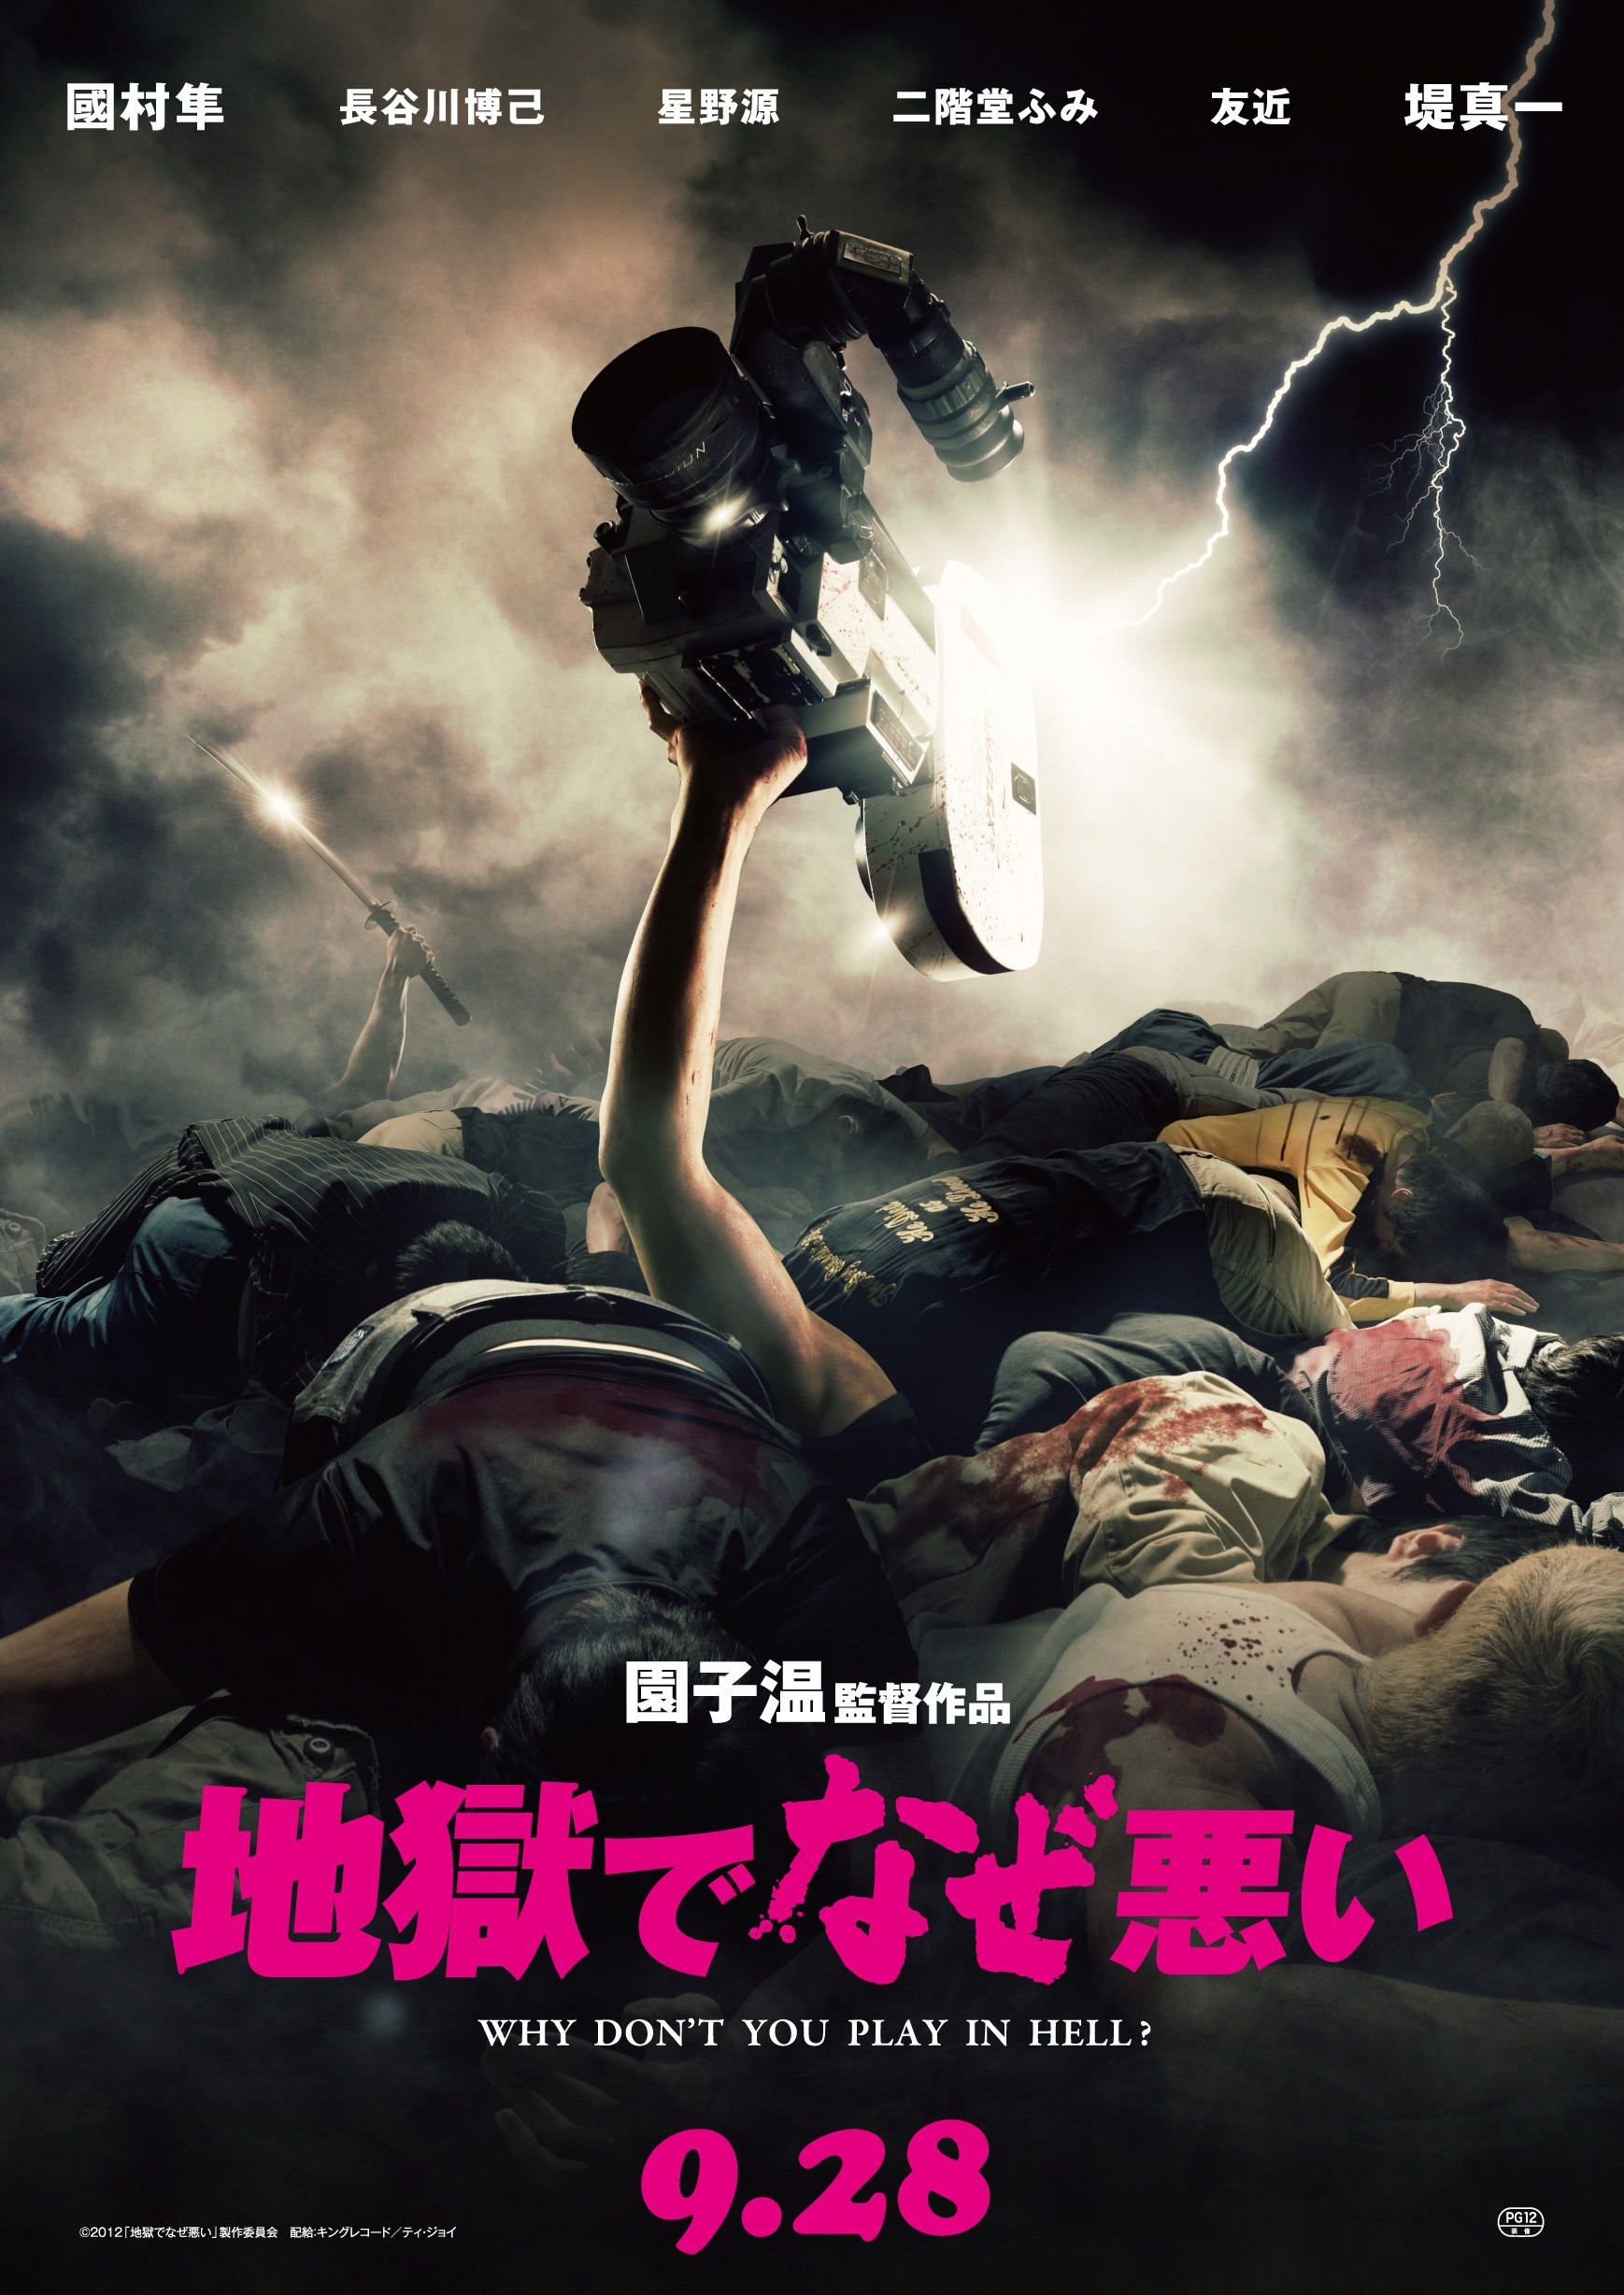 Mega Sized Movie Poster Image for Jigoku de naze warui 